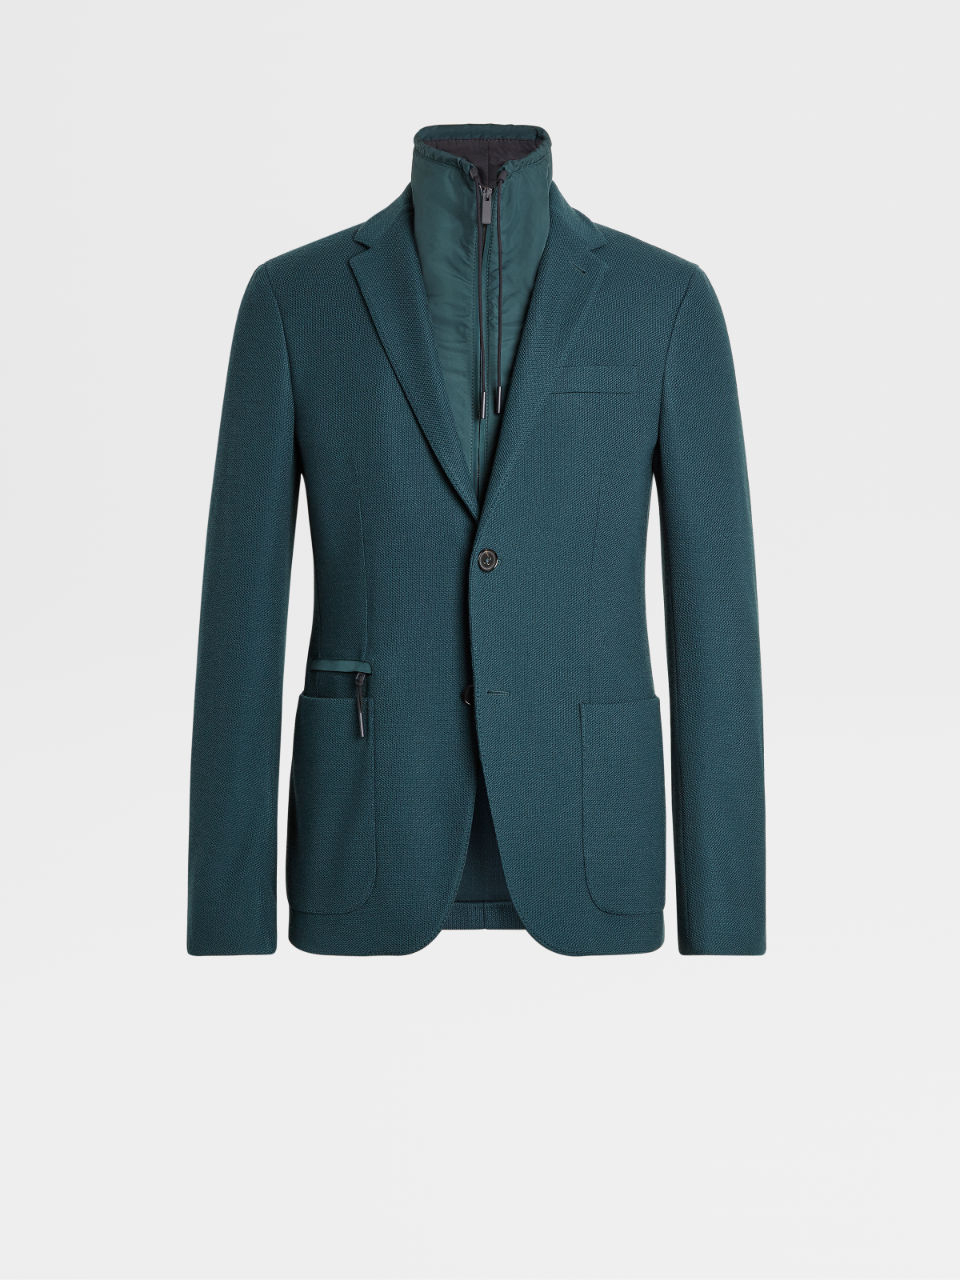 High Performance™ Wool Jersey Jacket with Detachable Technical Fiber Bib